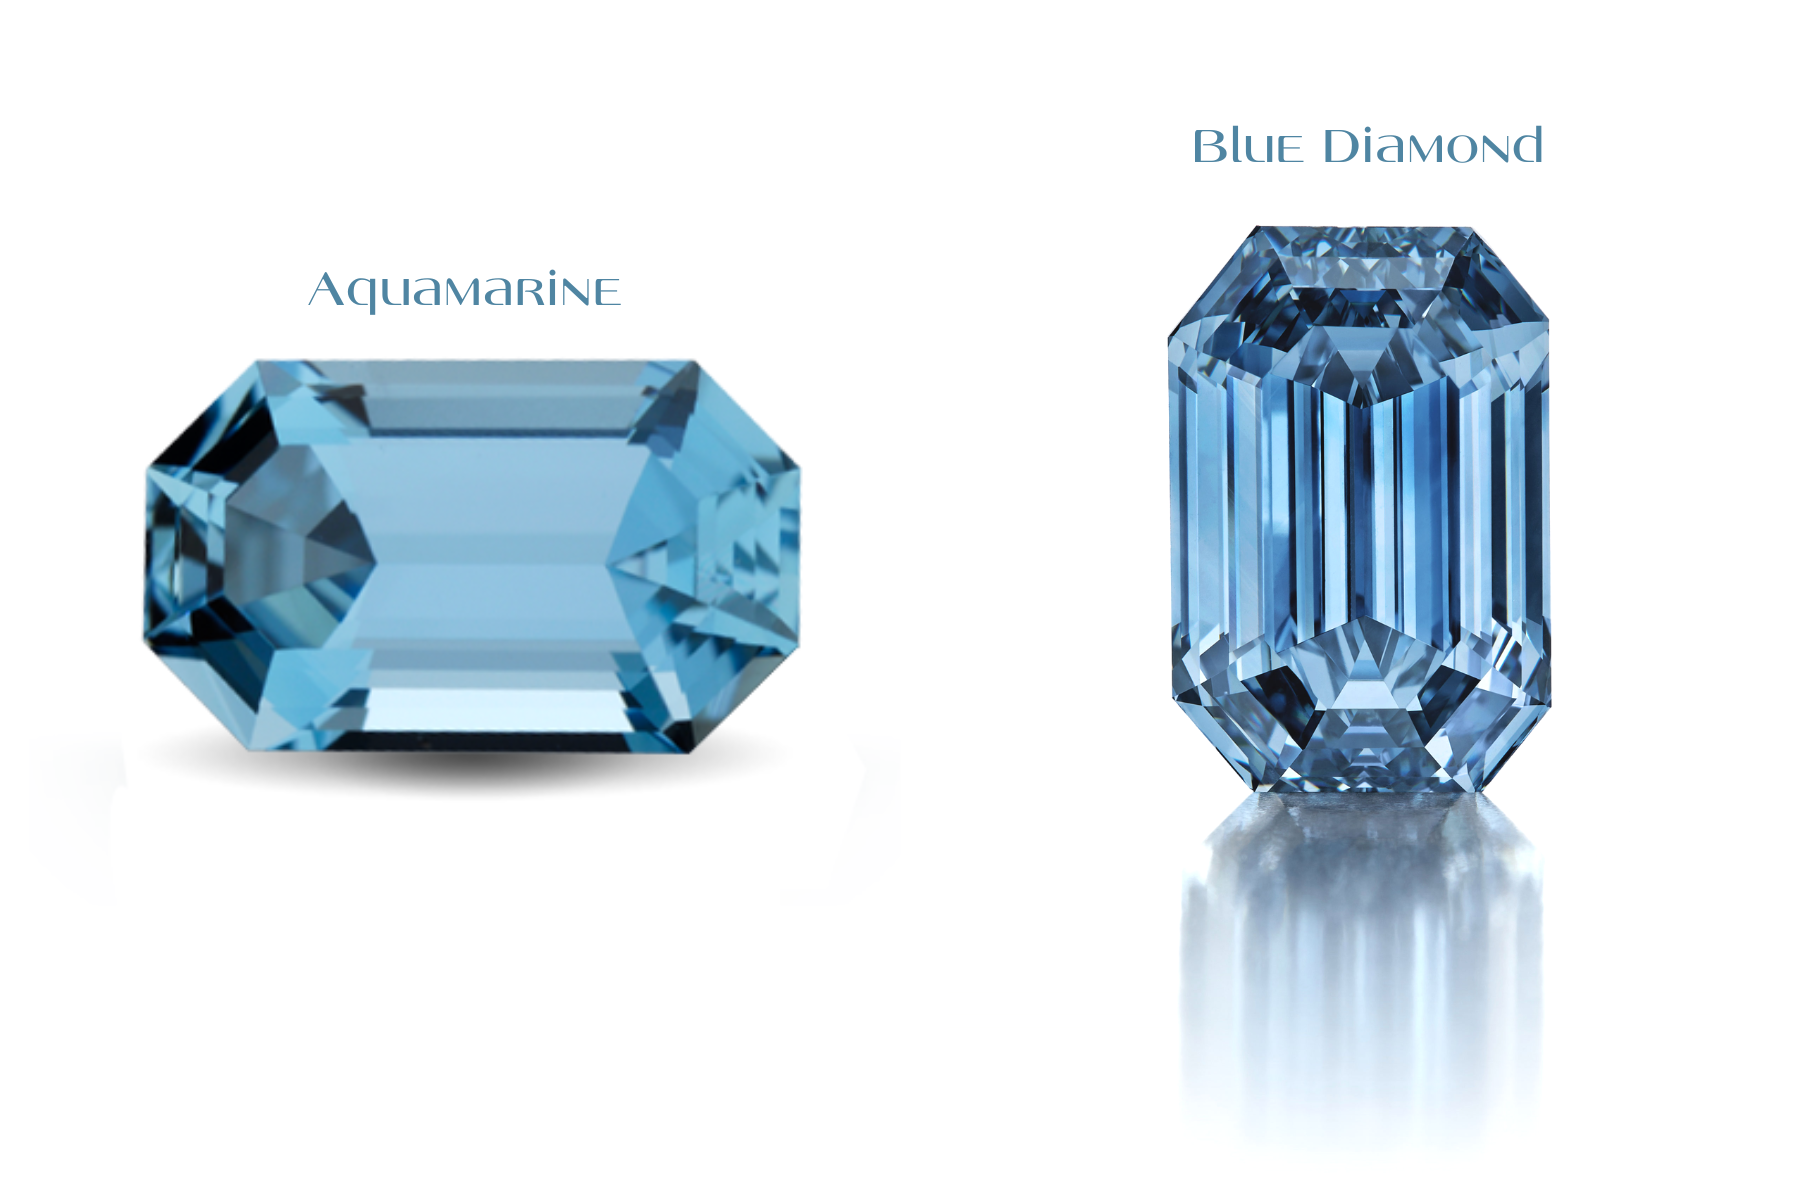 An aquamarine stone next to the blue diamond